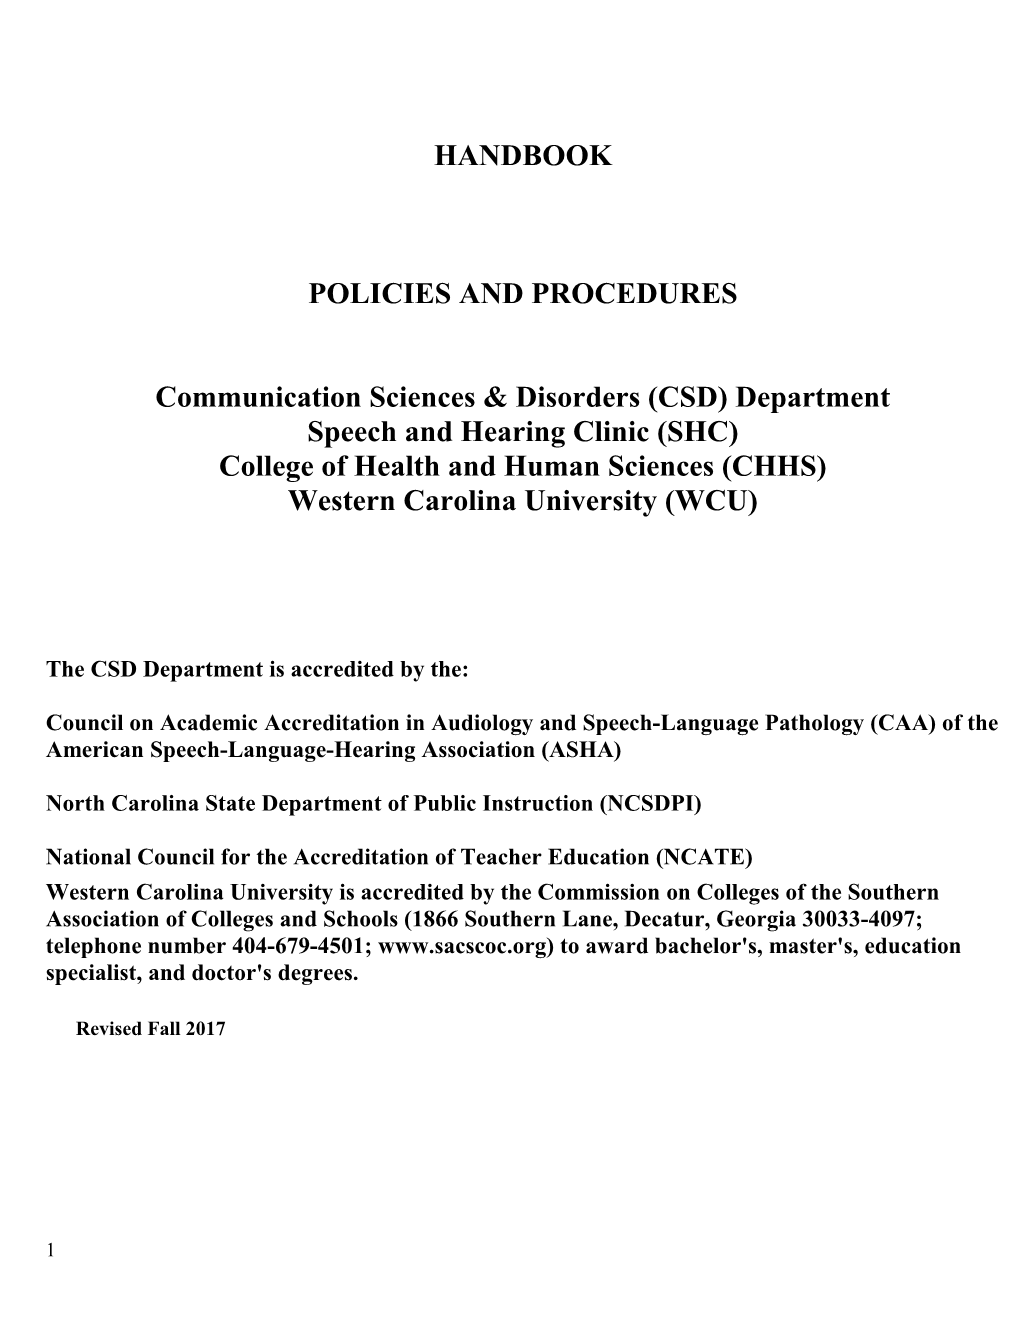 Communication Sciences & Disorders (CSD) Department